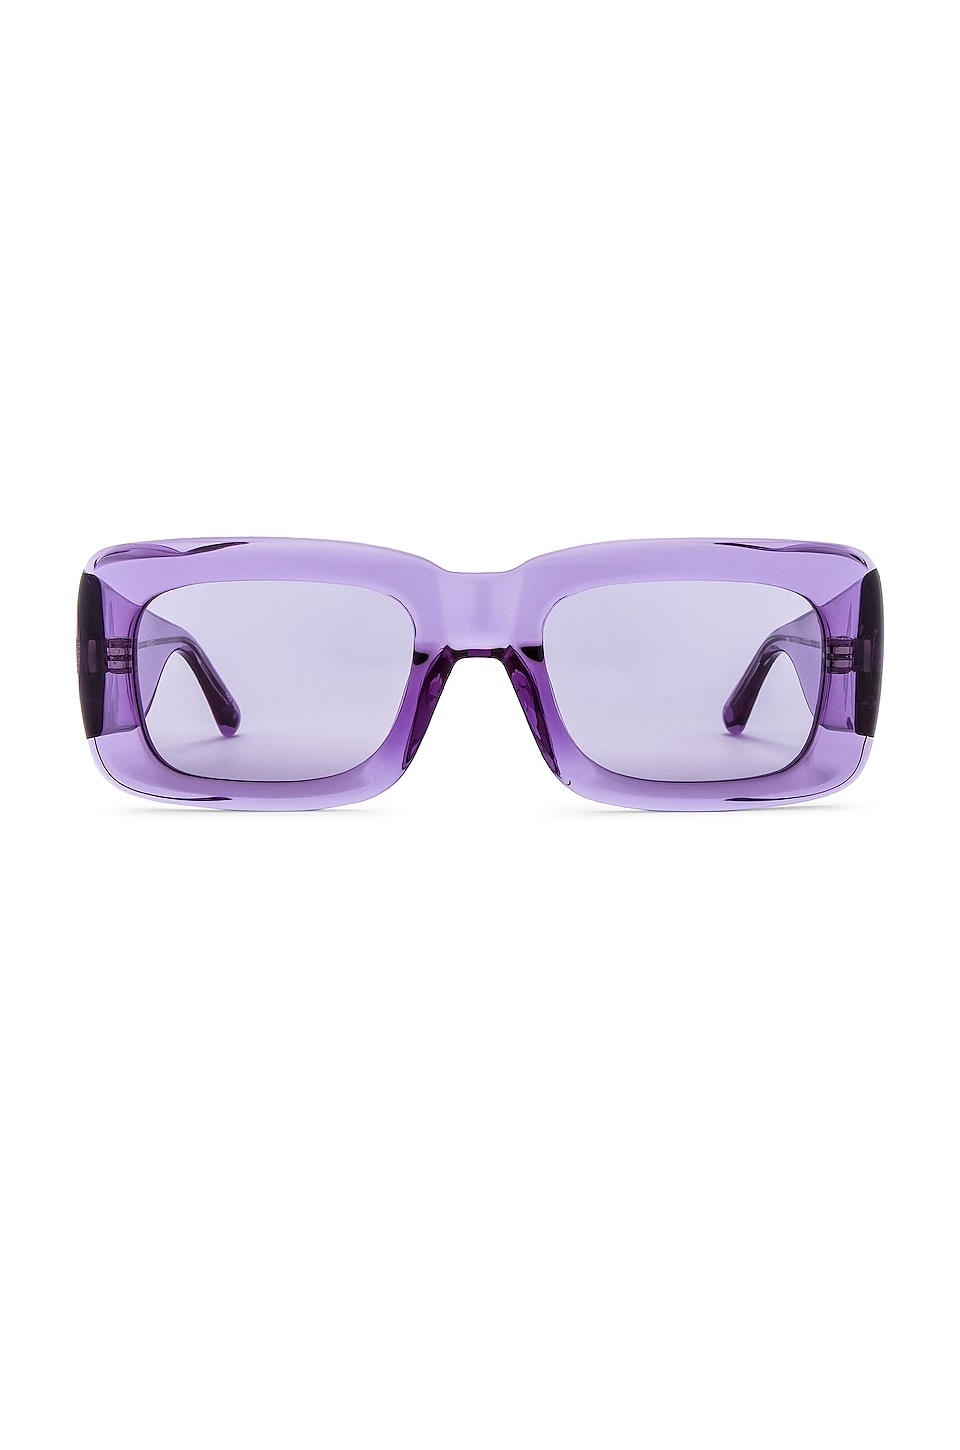 The Attico - Marfa rectangular purple sunglasses